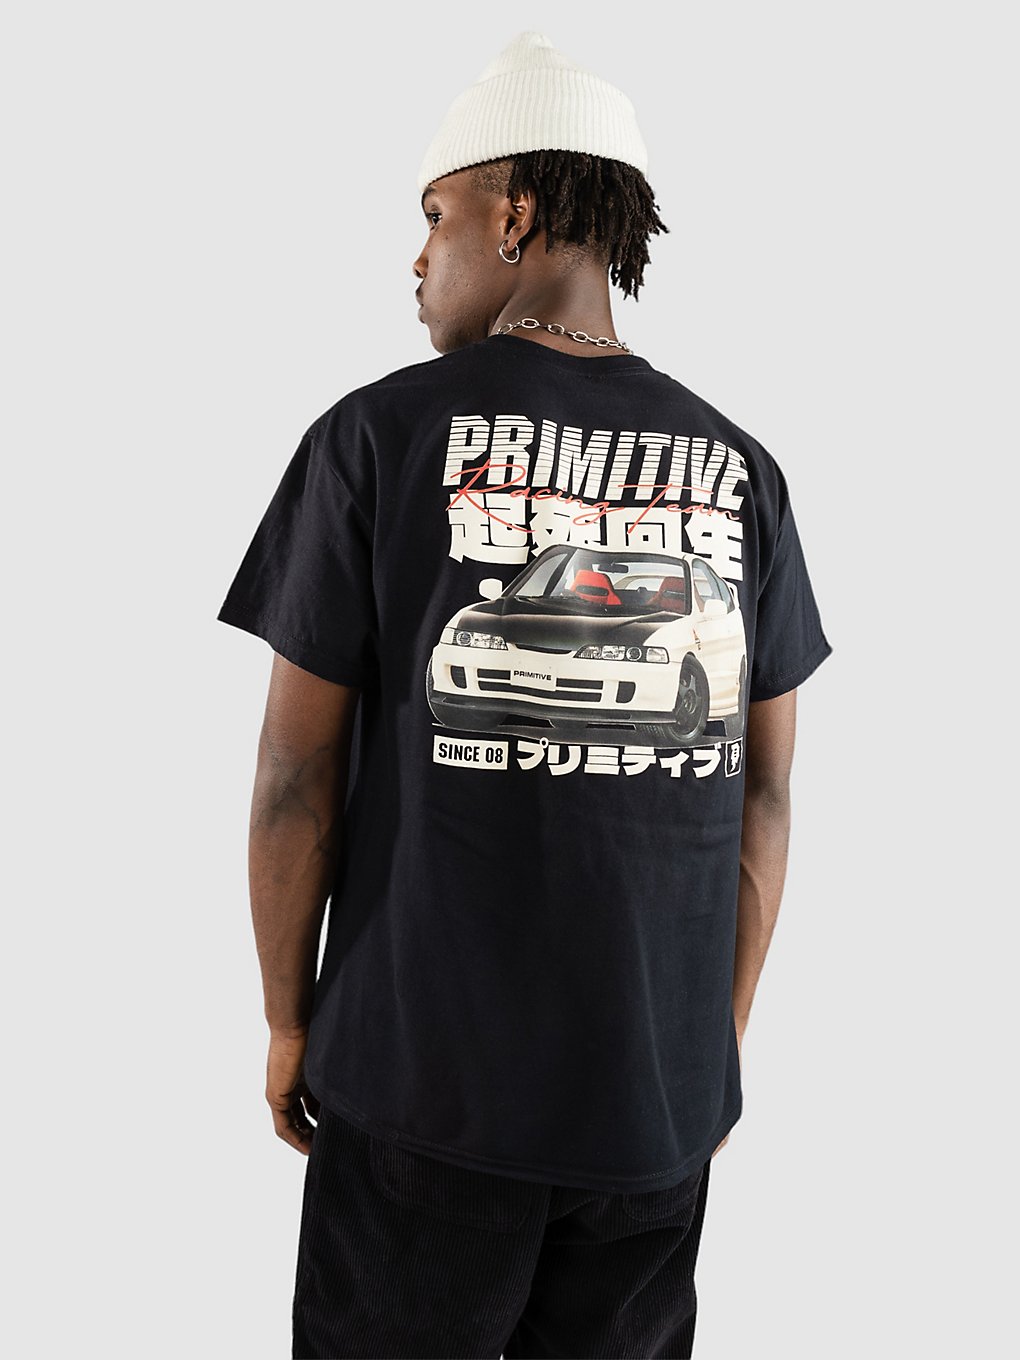 Primitive Racer Tee T-Shirt black kaufen